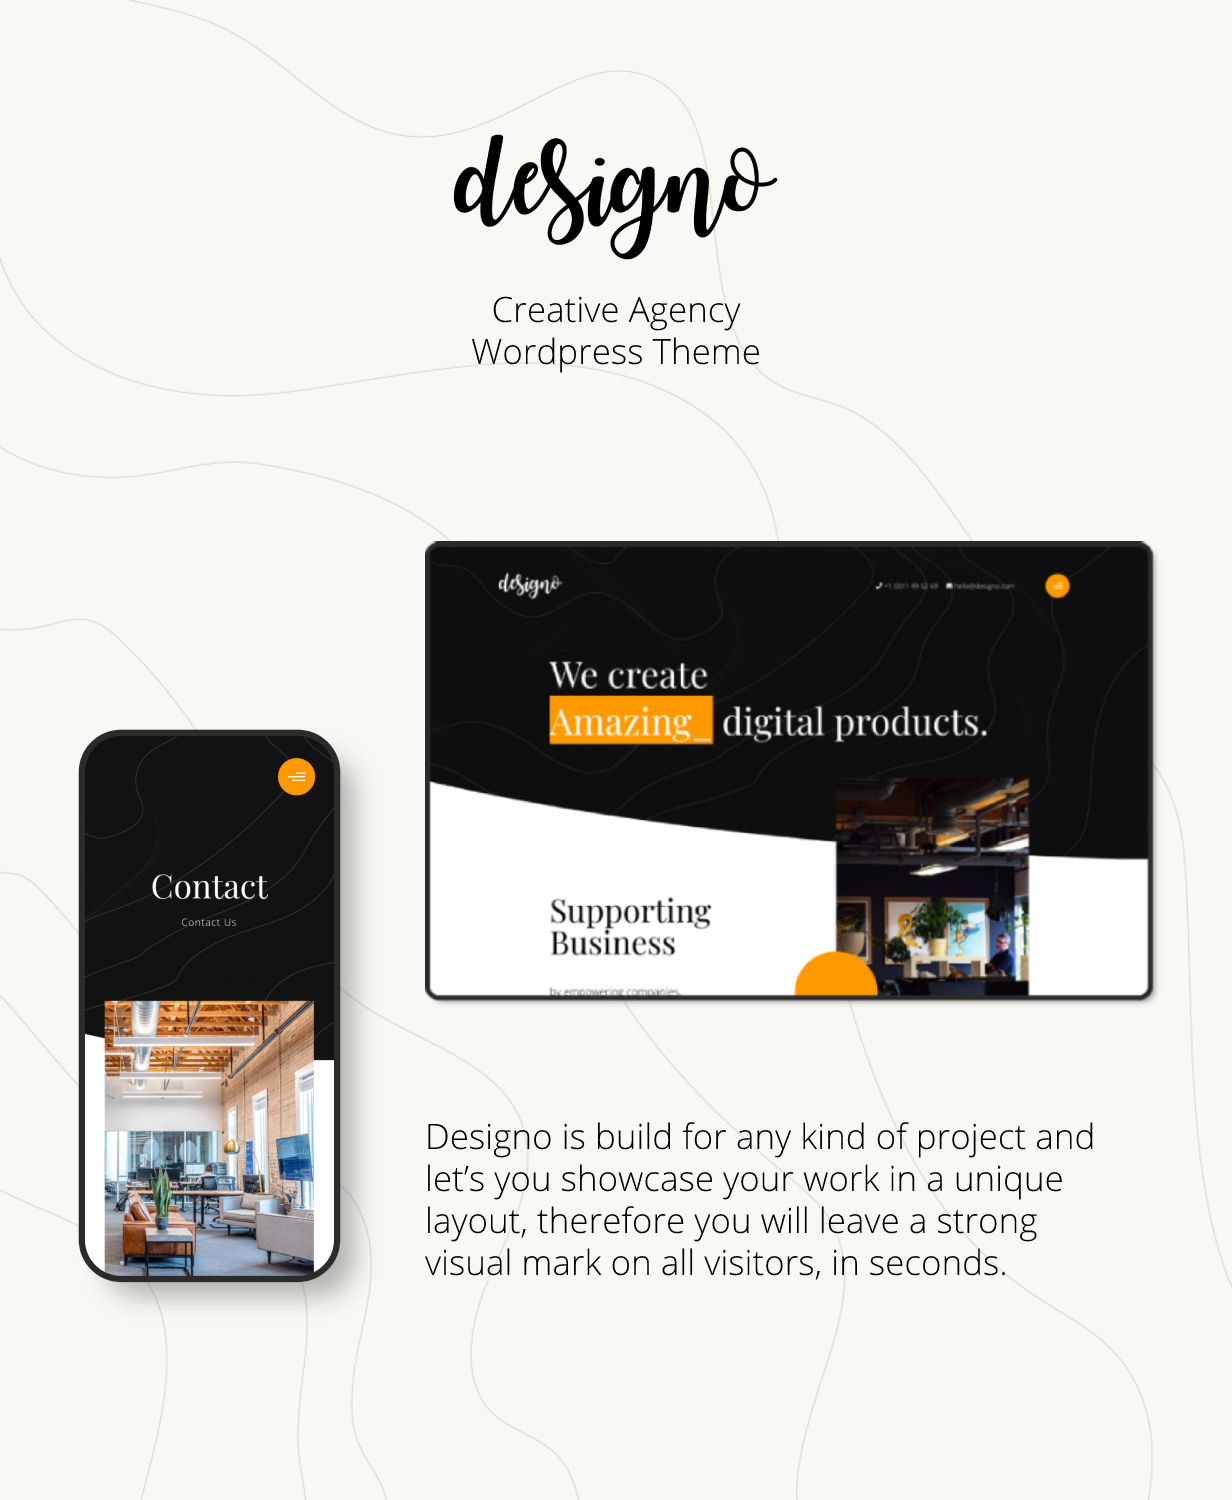 Designo - Creative Agency WordPress Theme - 1